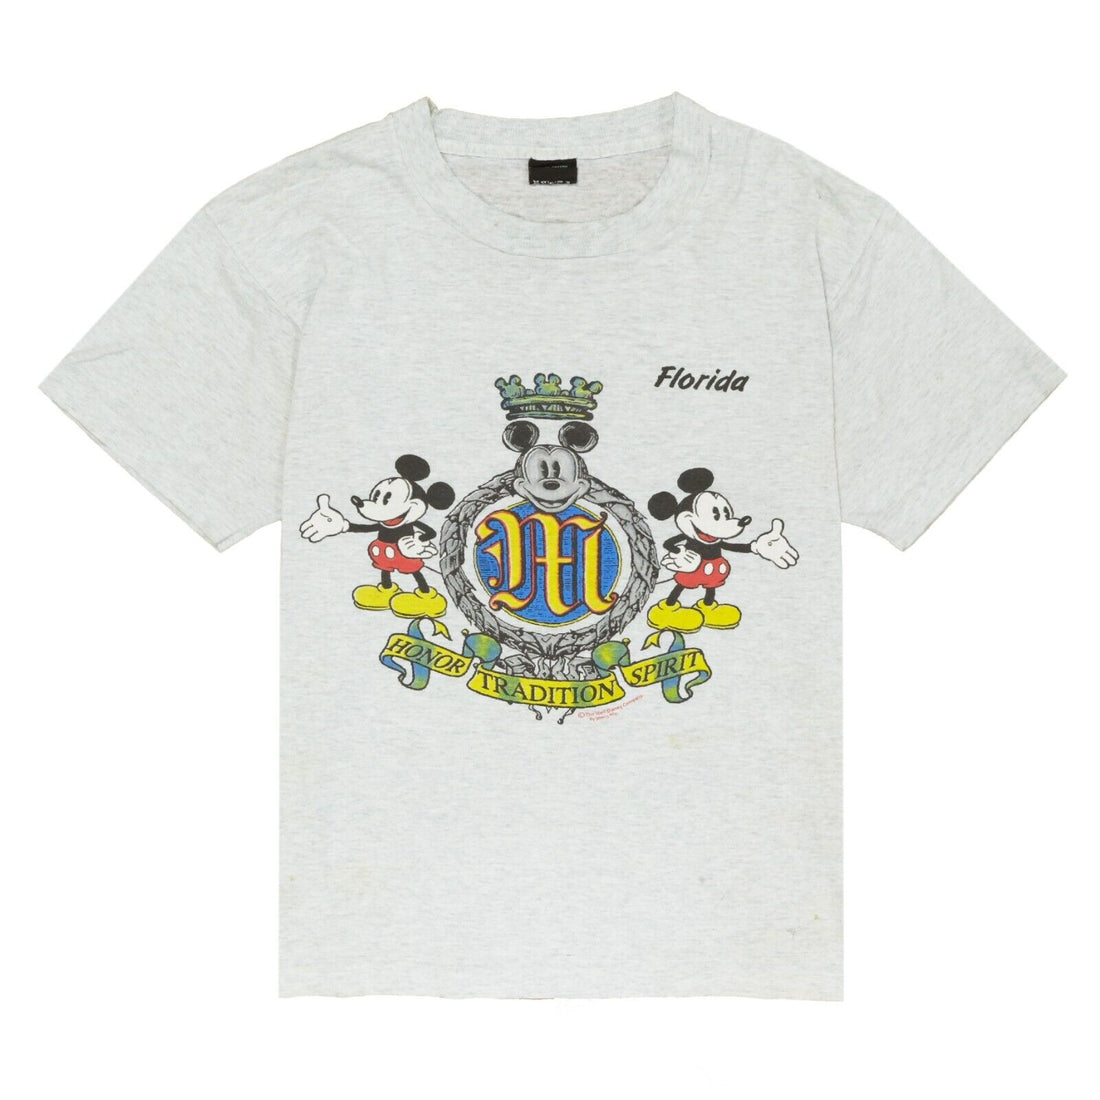 Vintage Mickey Mouse Florida Disney T-Shirt Size Medium Gray 90s